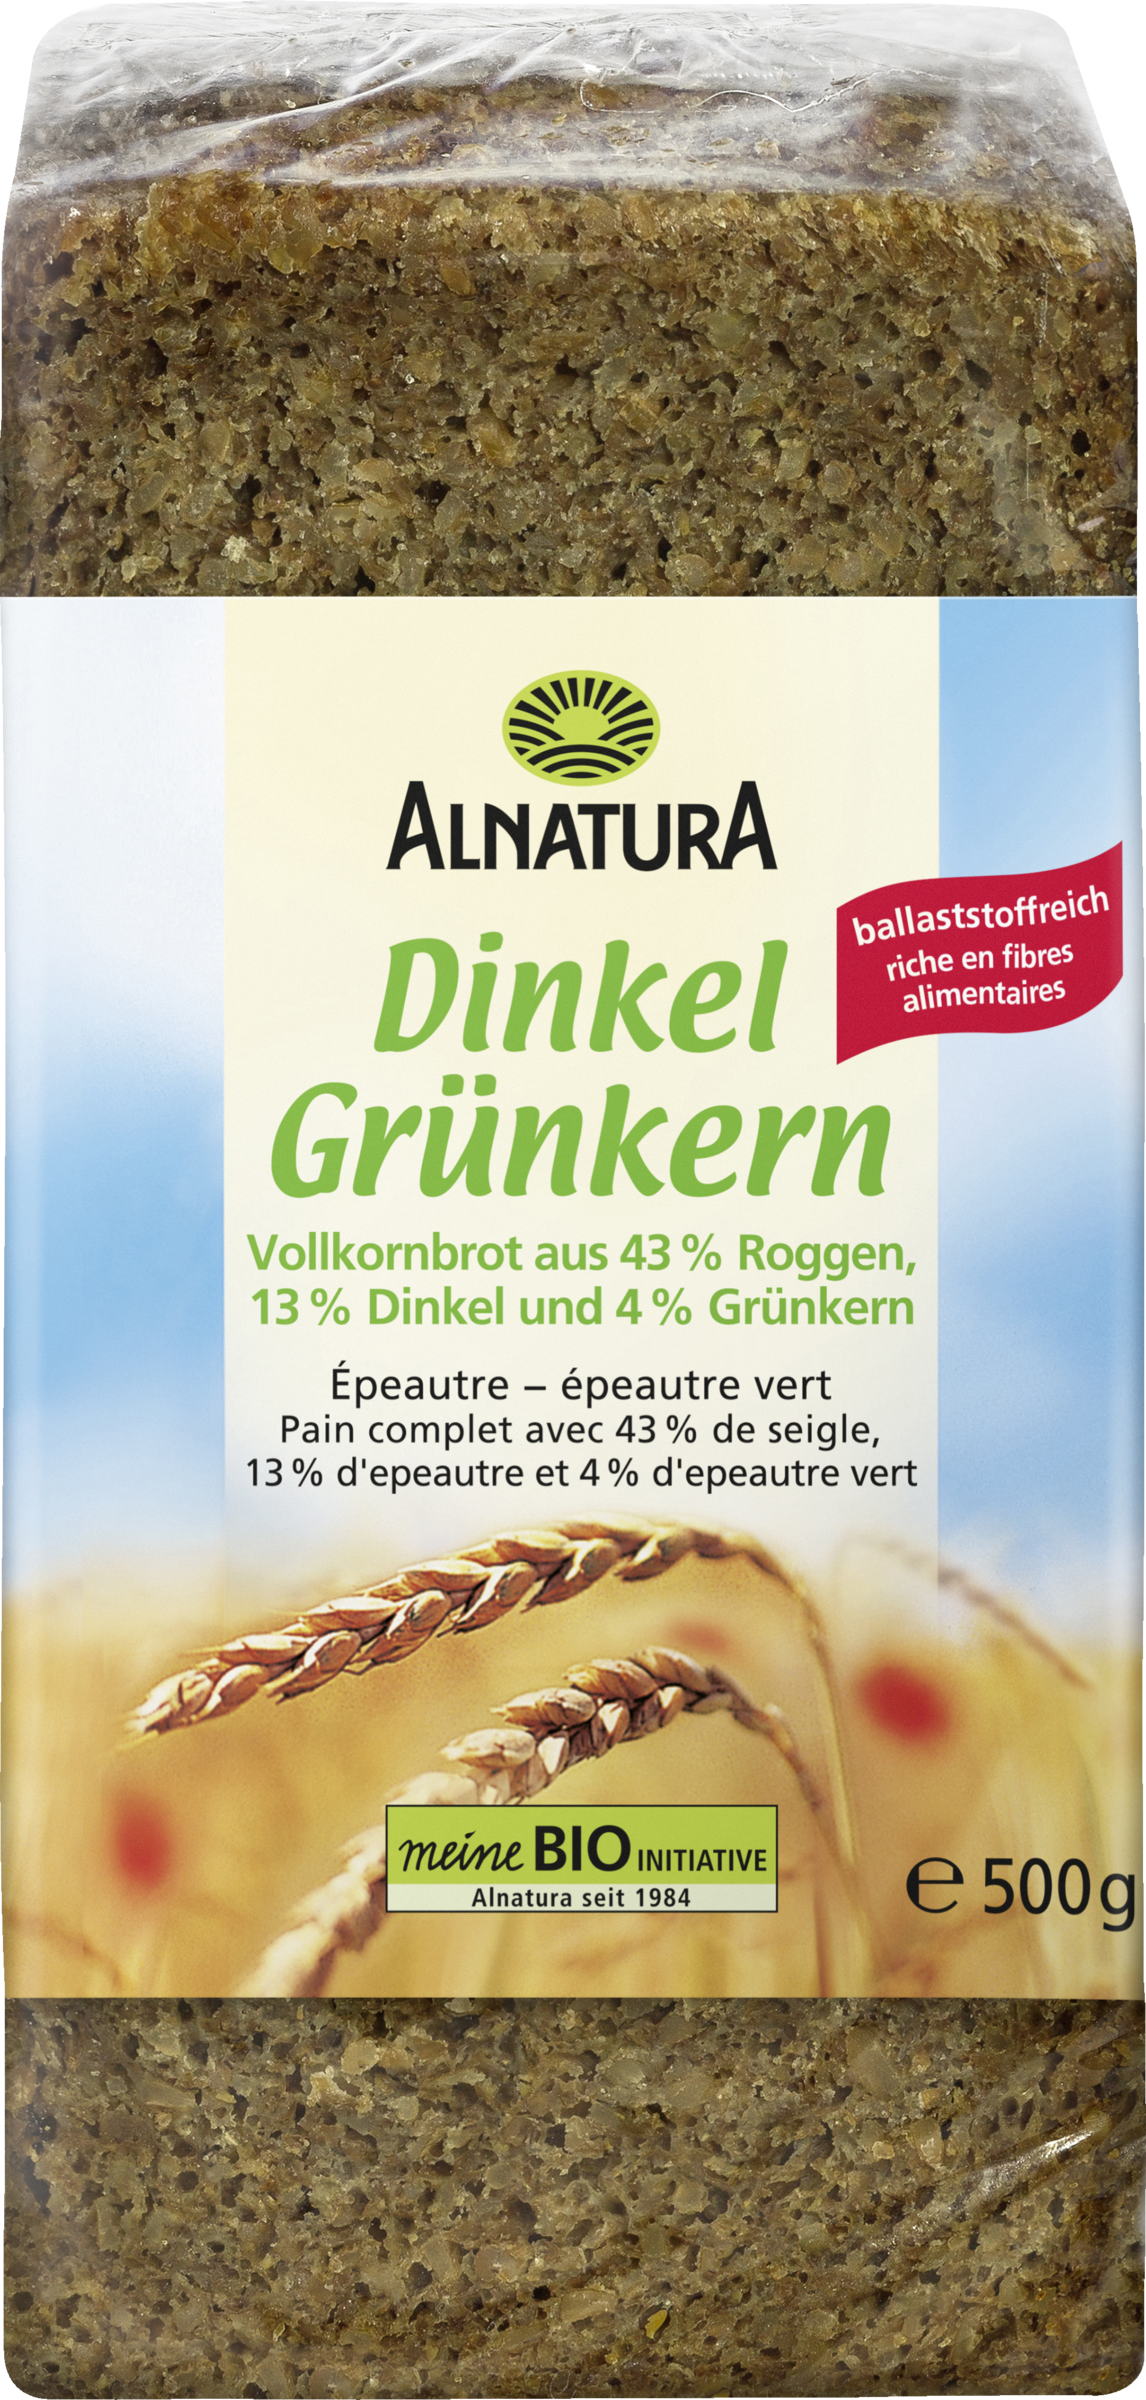 Alnatura Bio Dinkel Grünkern Vollkornbrot online kaufen | rossmann.de